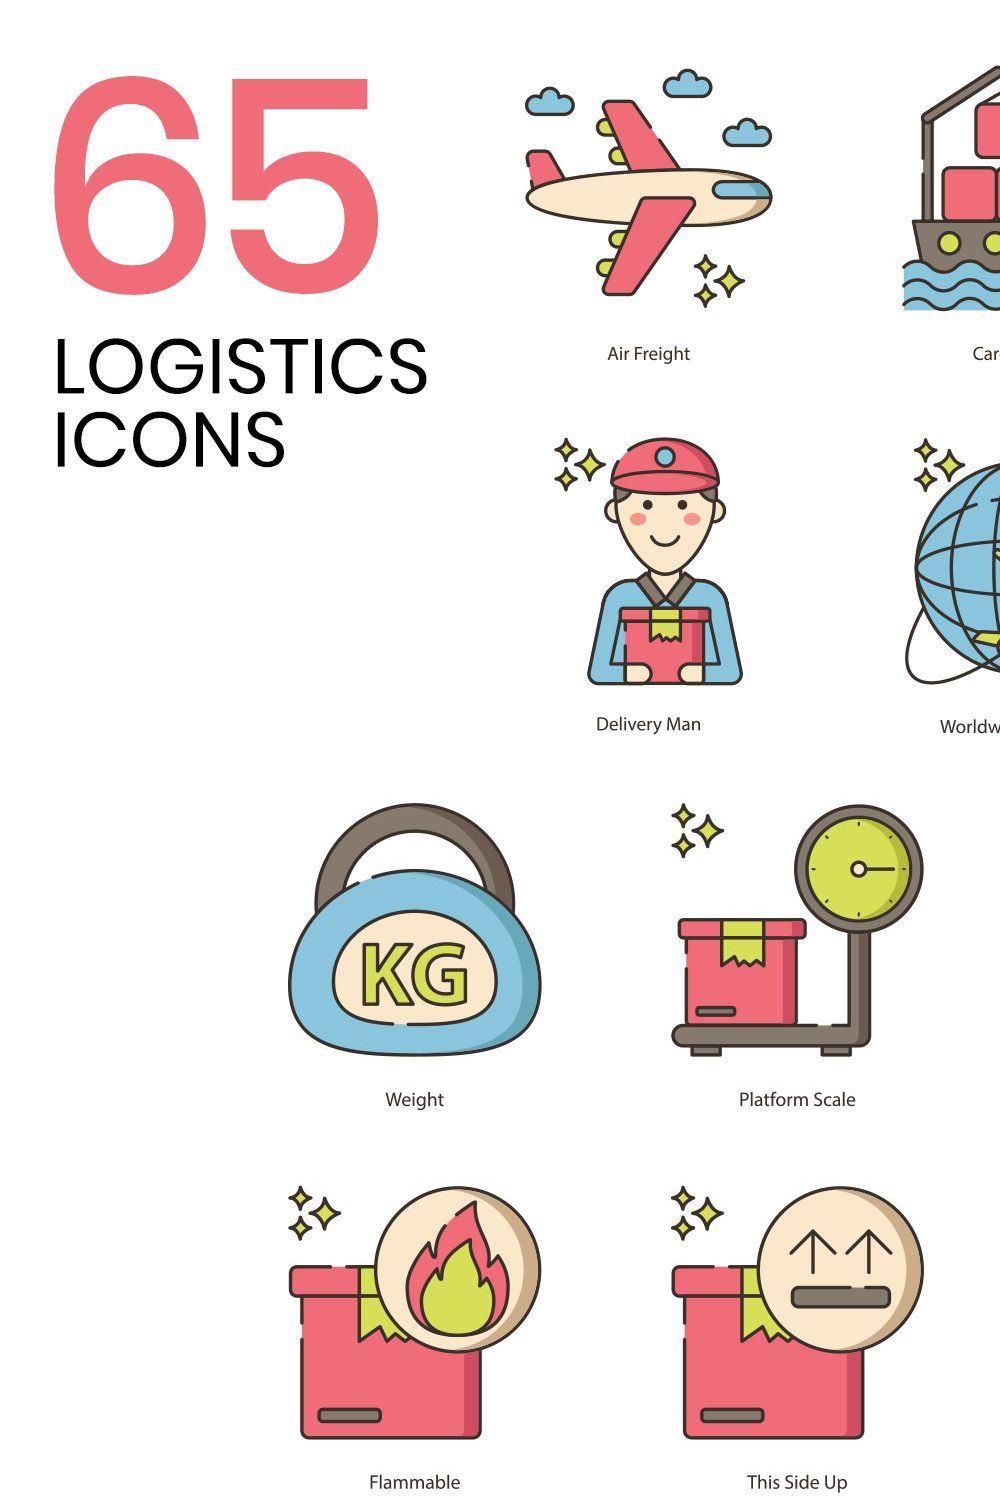 65 Logistics Icons - Hazel Series pinterest preview image.